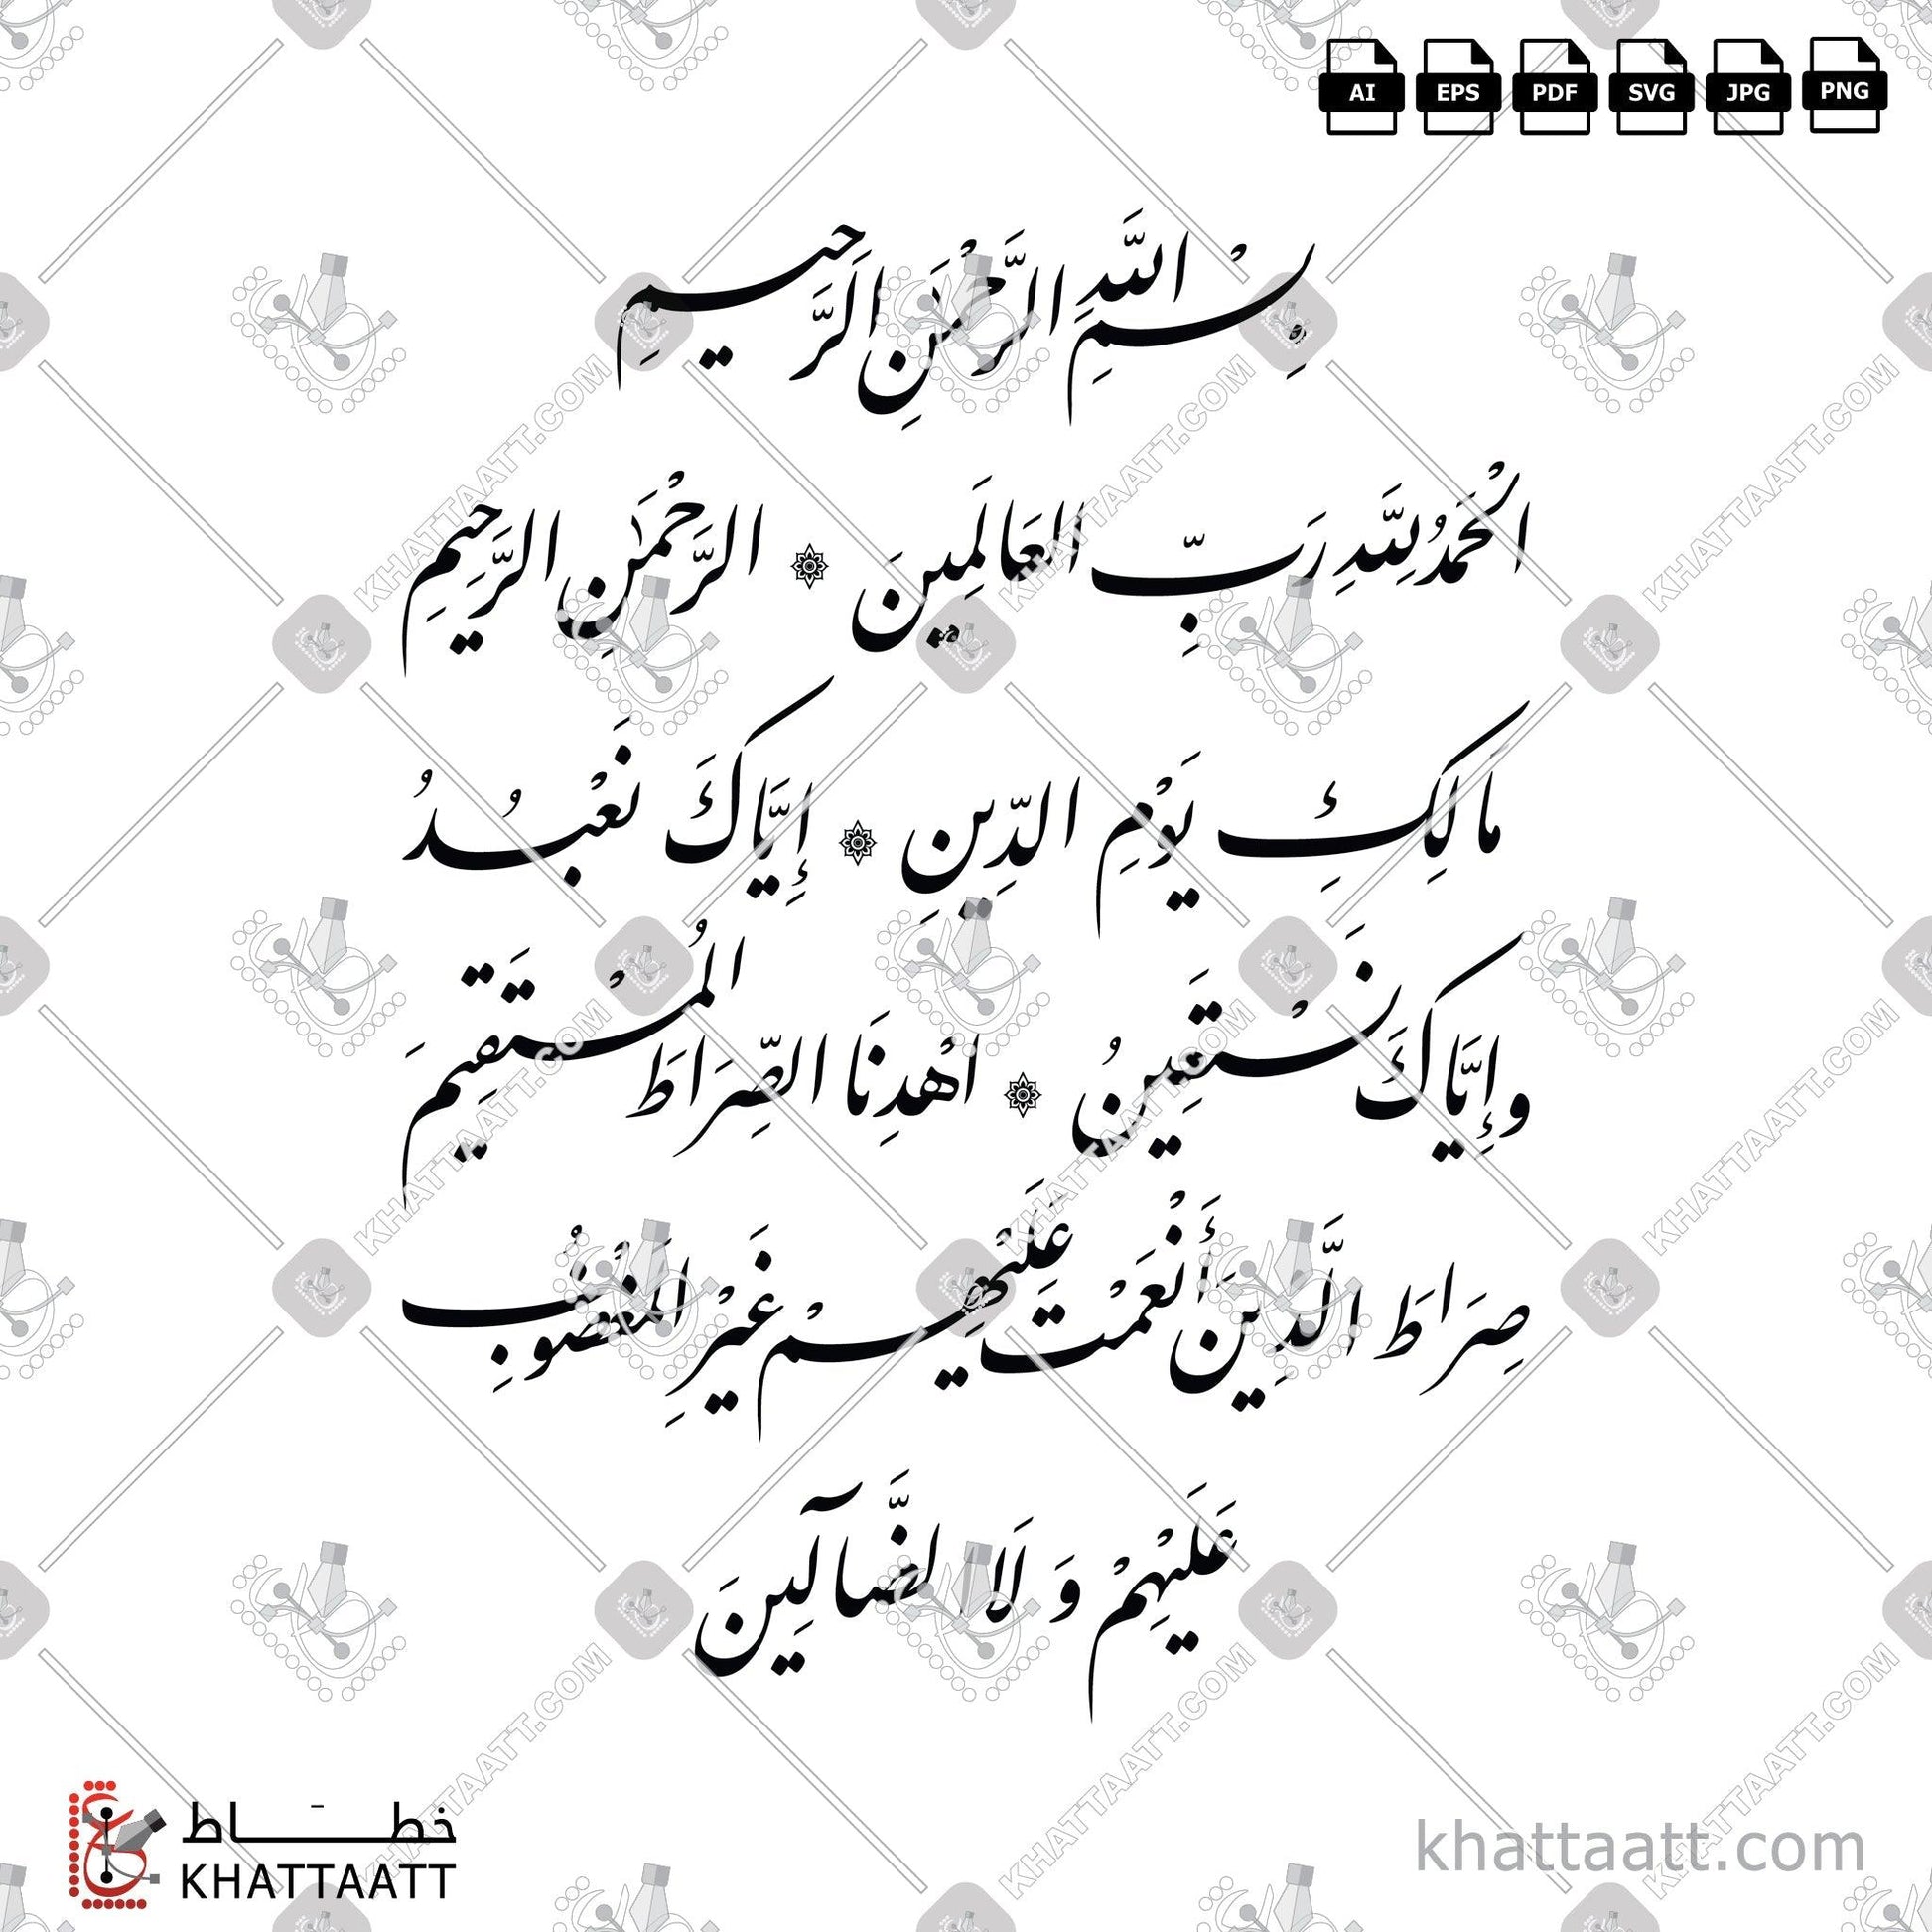 Digital Arabic calligraphy vector of Surat Al-Fatiha - سورة الفاتحة in Farsi - الخط الفارسي